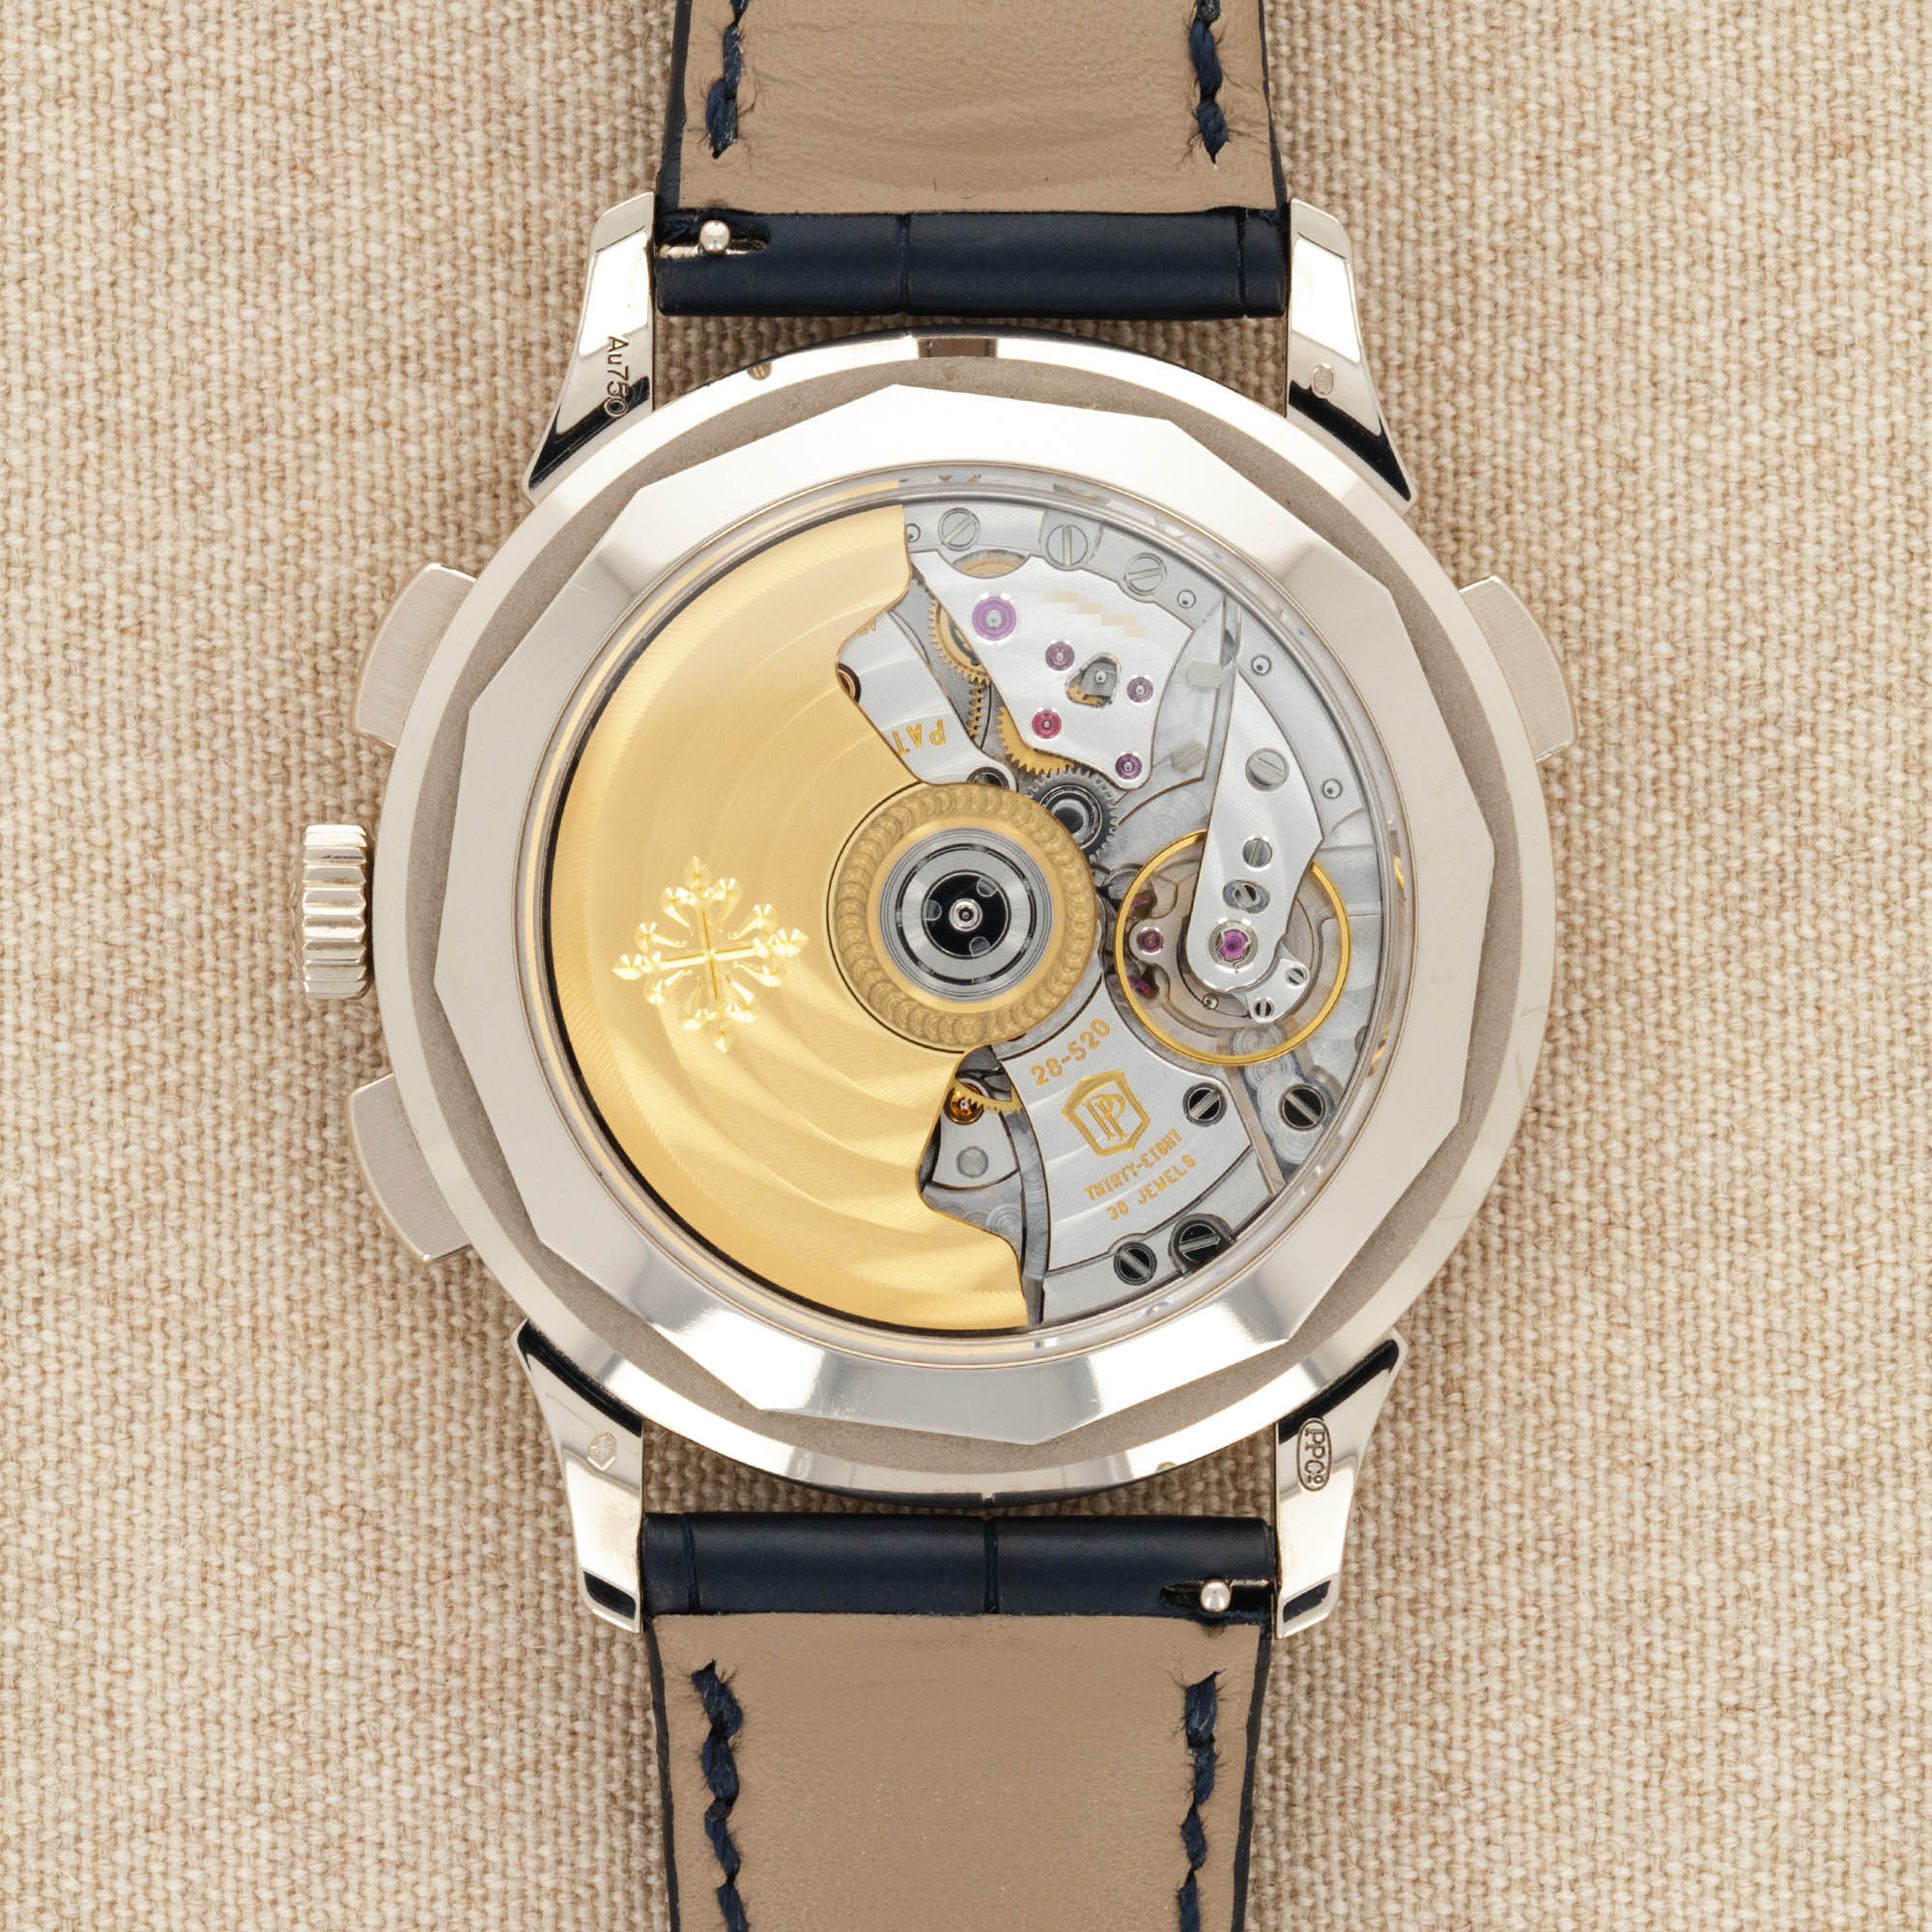 Patek Philippe - Patek Philippe White Gold World Time Chronograph Ref. 5930G - The Keystone Watches